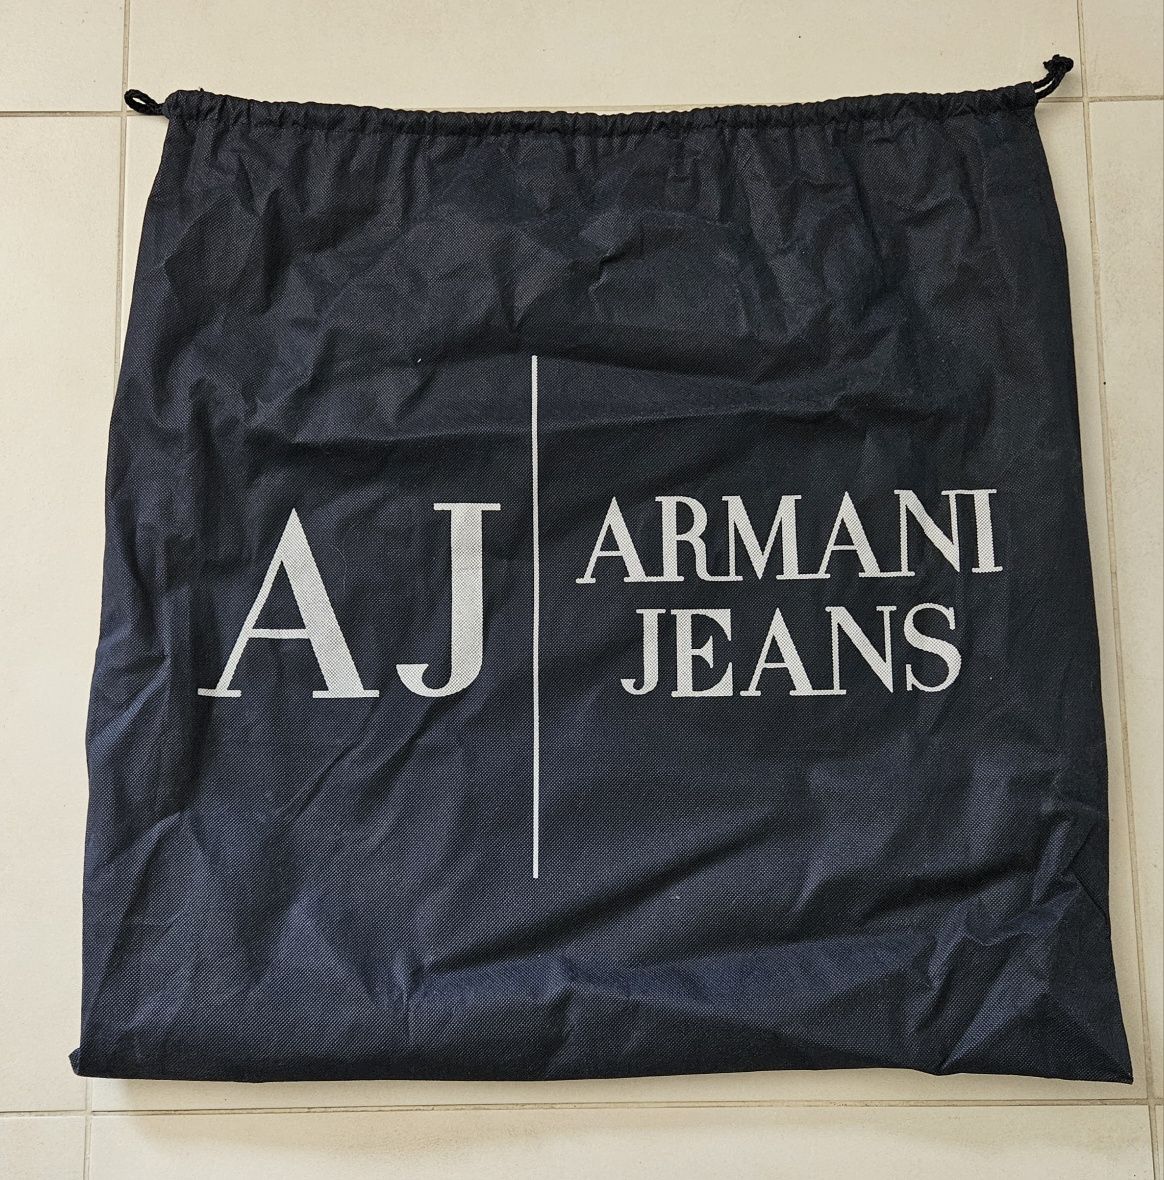 Torebka Armani Jeans